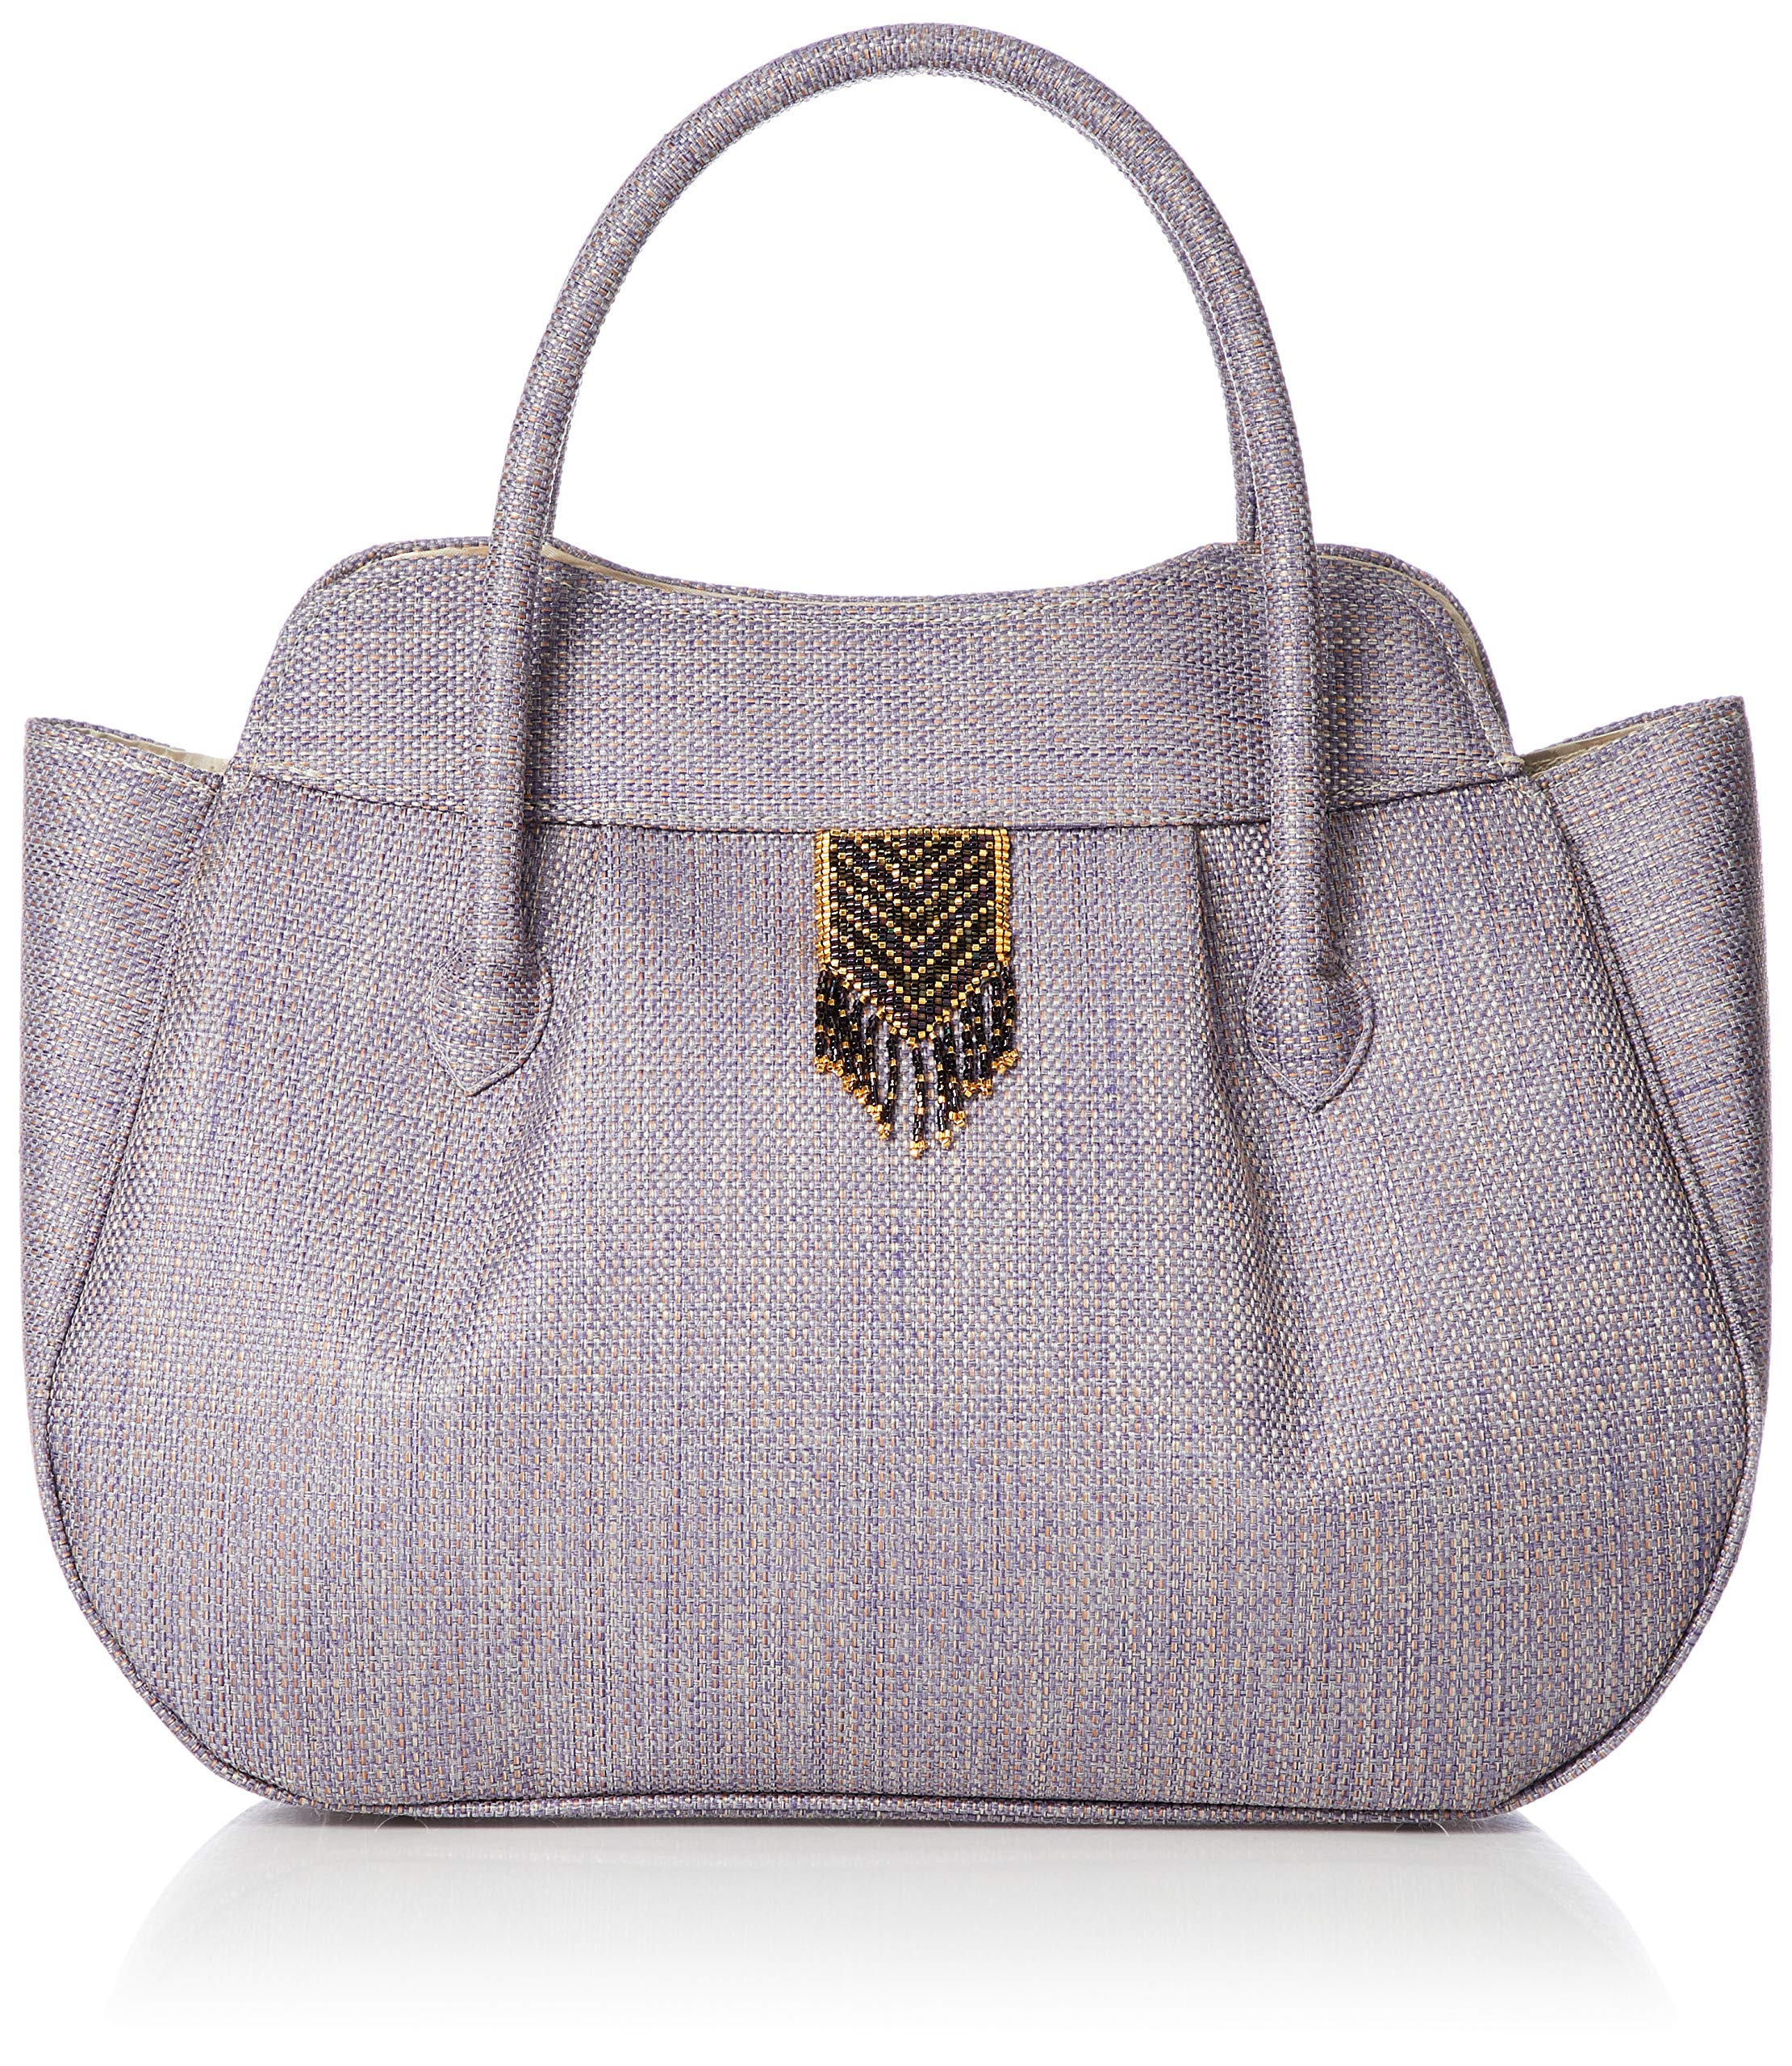 Sebian(セビアン) Handbag (Japanese-Made in Japan)